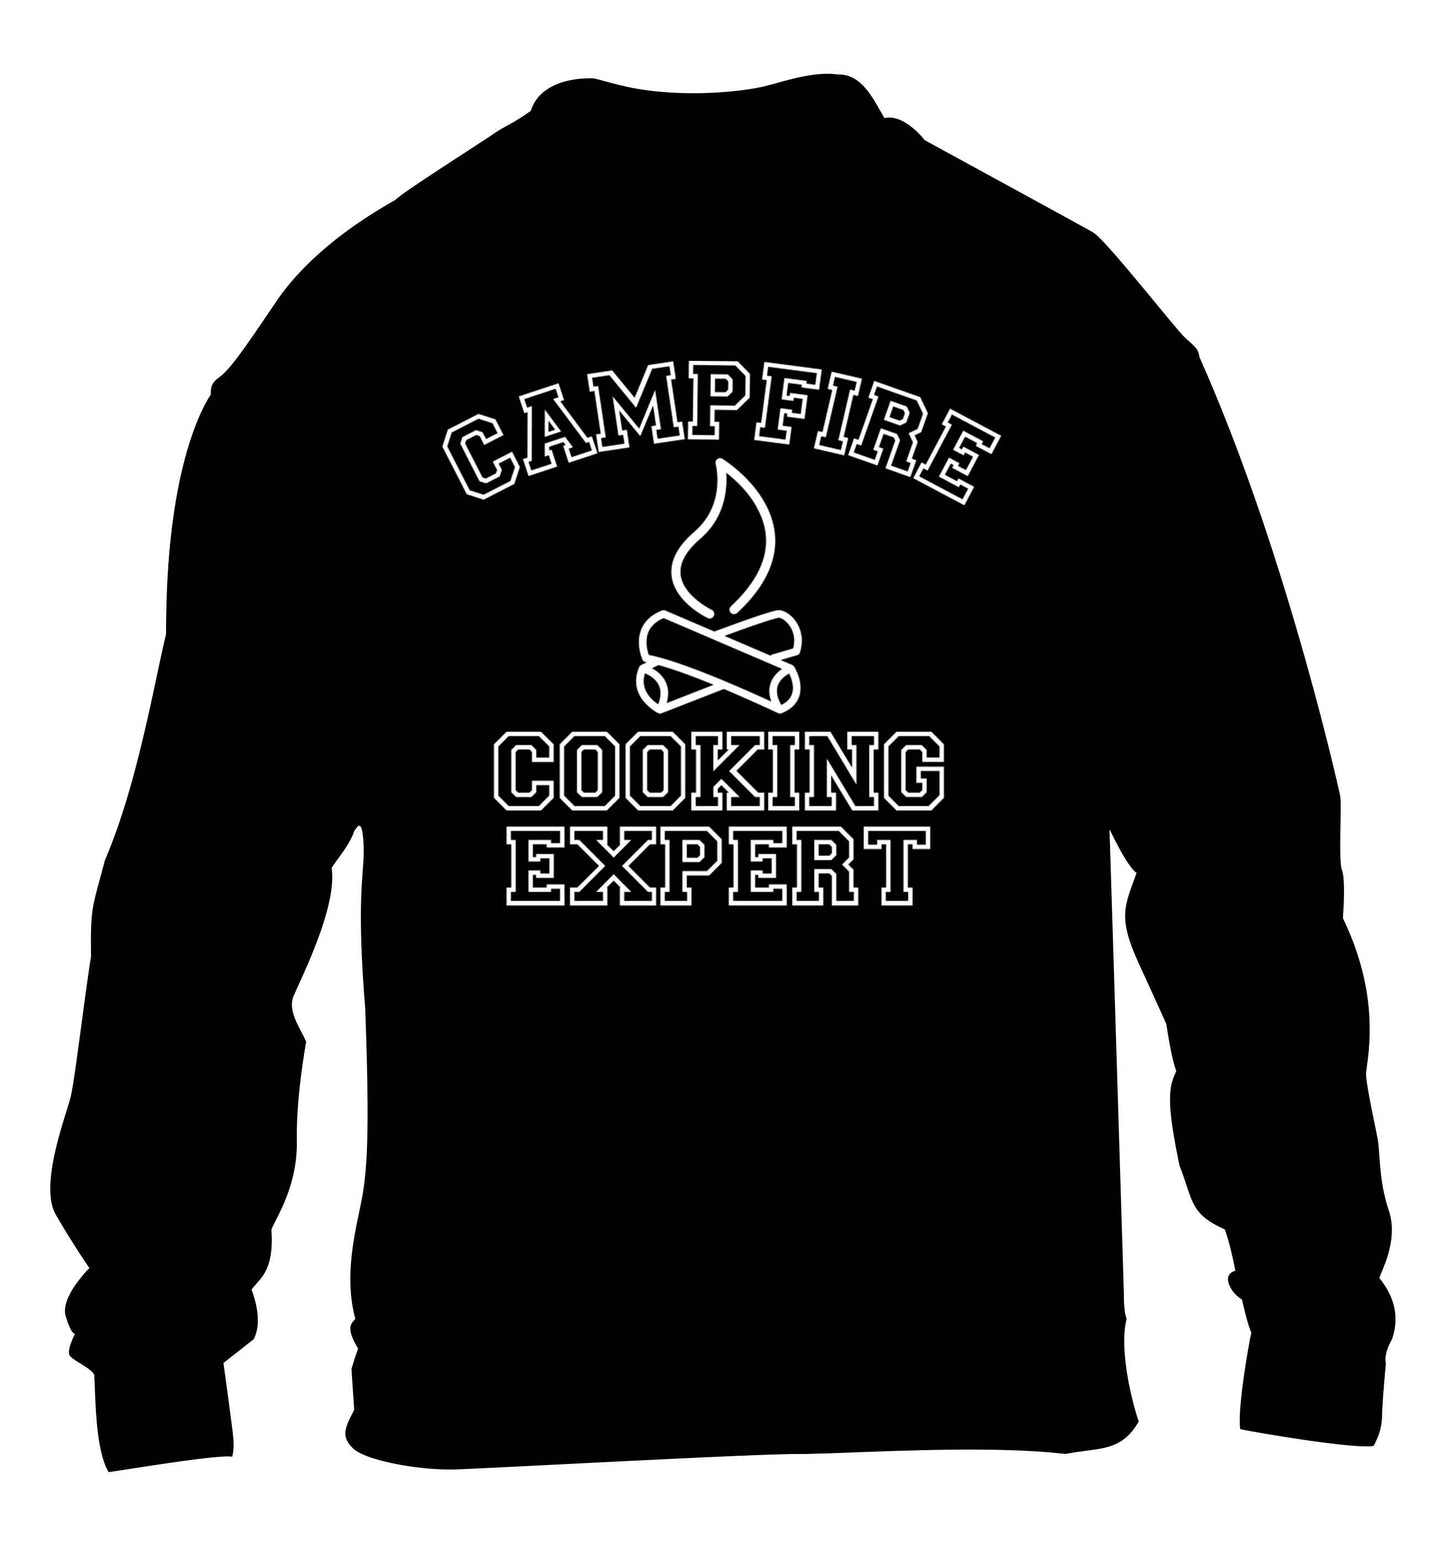 Campfire cooking expert children's black sweater 12-13 Years